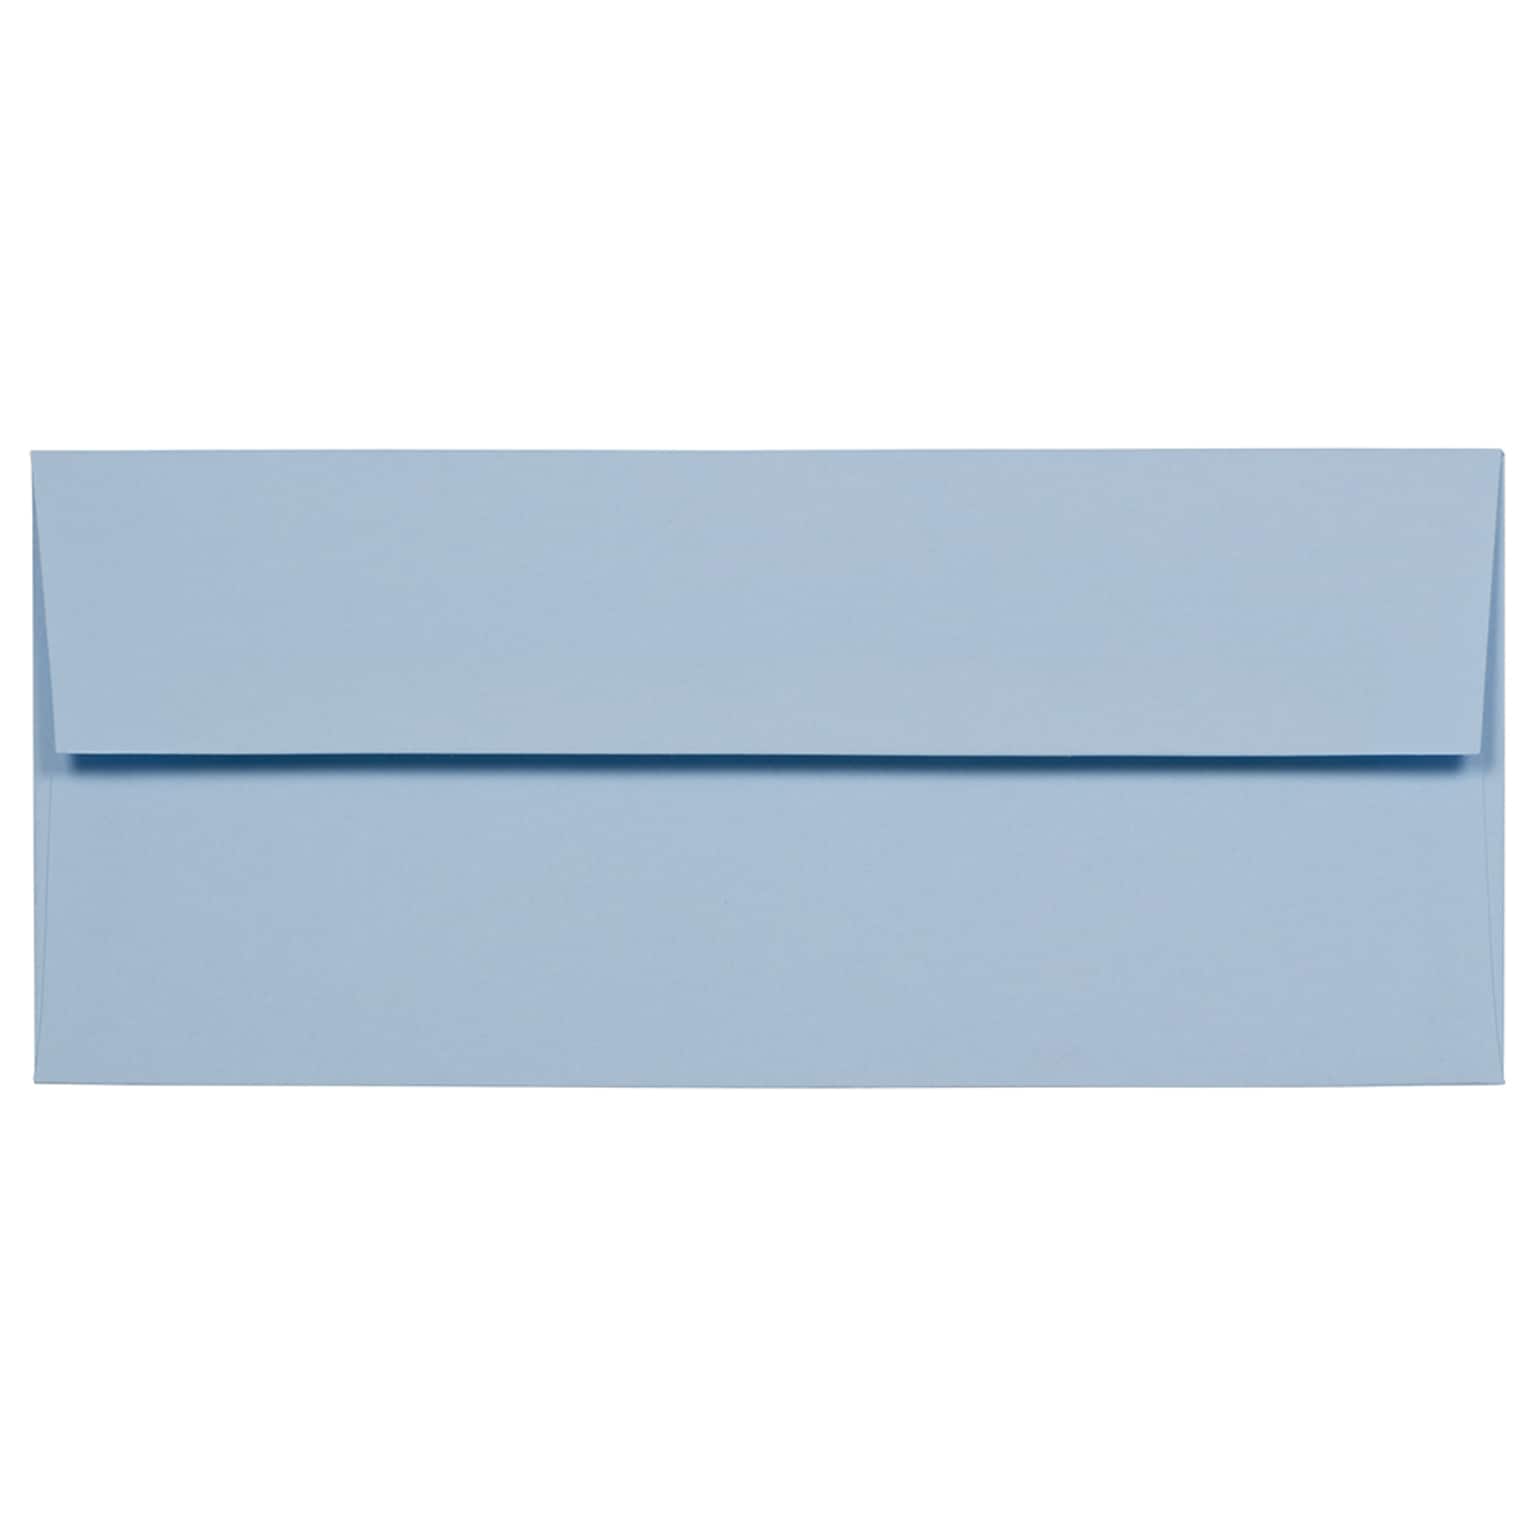 JAM Paper #10 Business Envelope, 4 1/8 x 9 1/2, Baby Blue, 1000/Carton (2155778B)